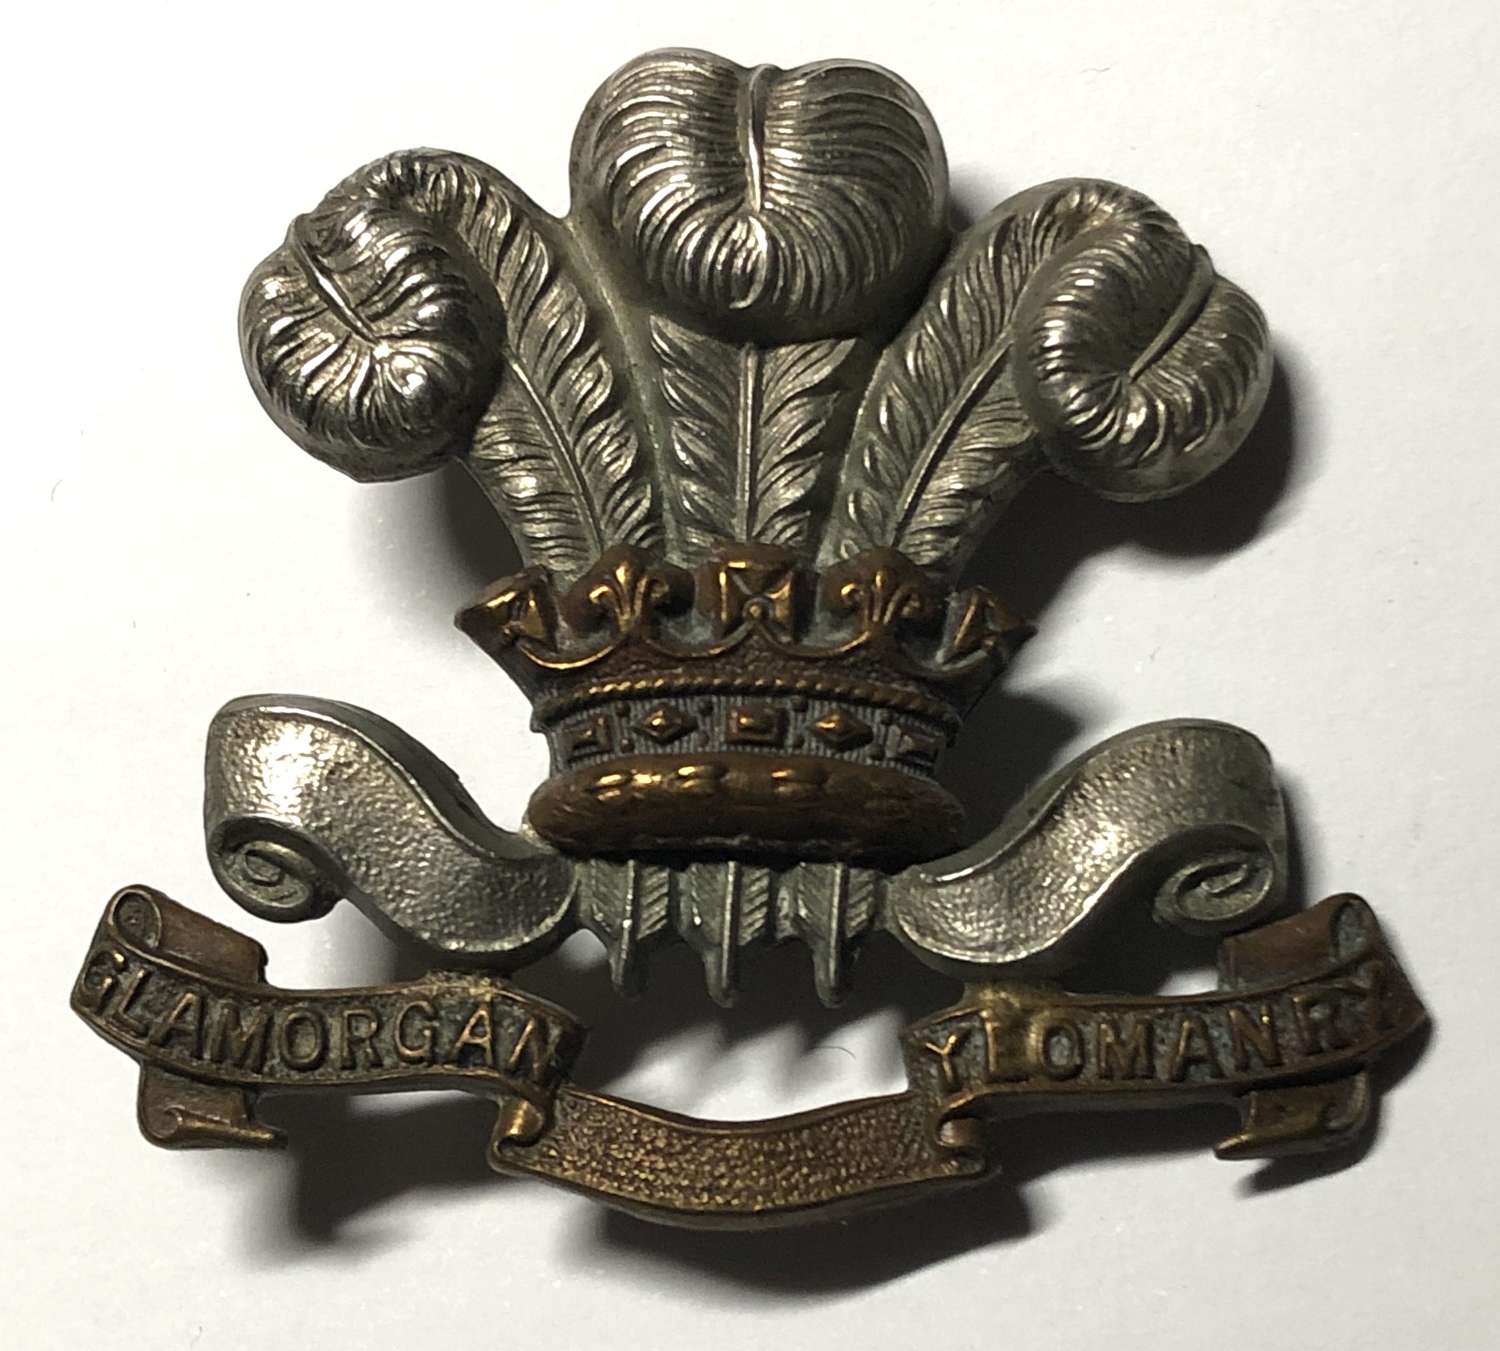 Welsh Glamorgan Yeomanry early post 1908 cap badge